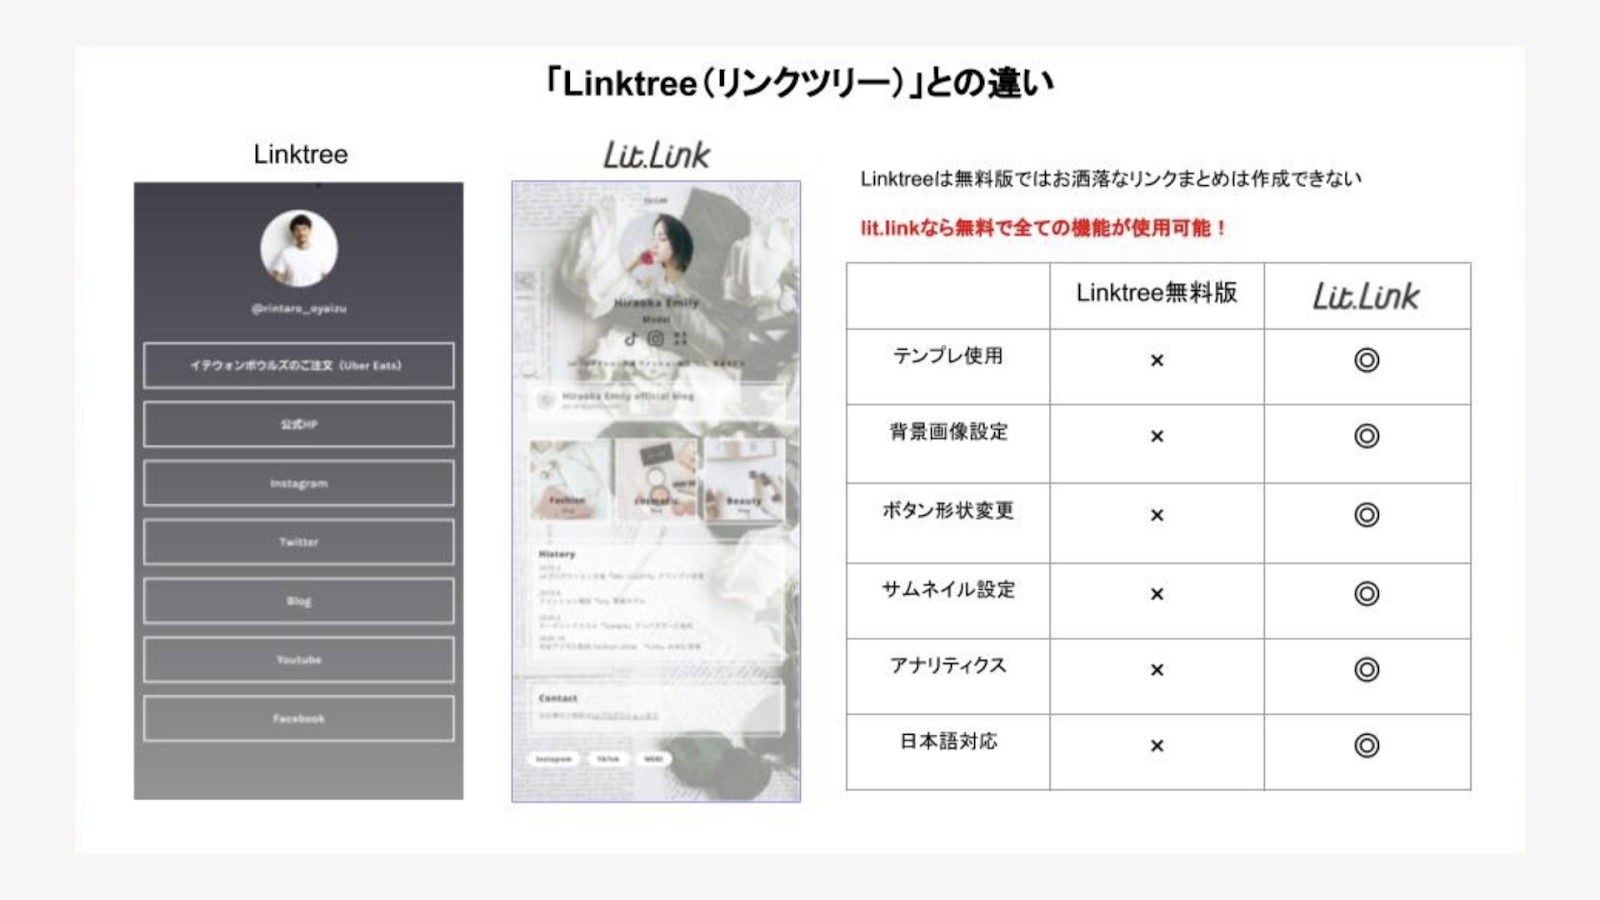 lit.linkとlinktreeの比較表